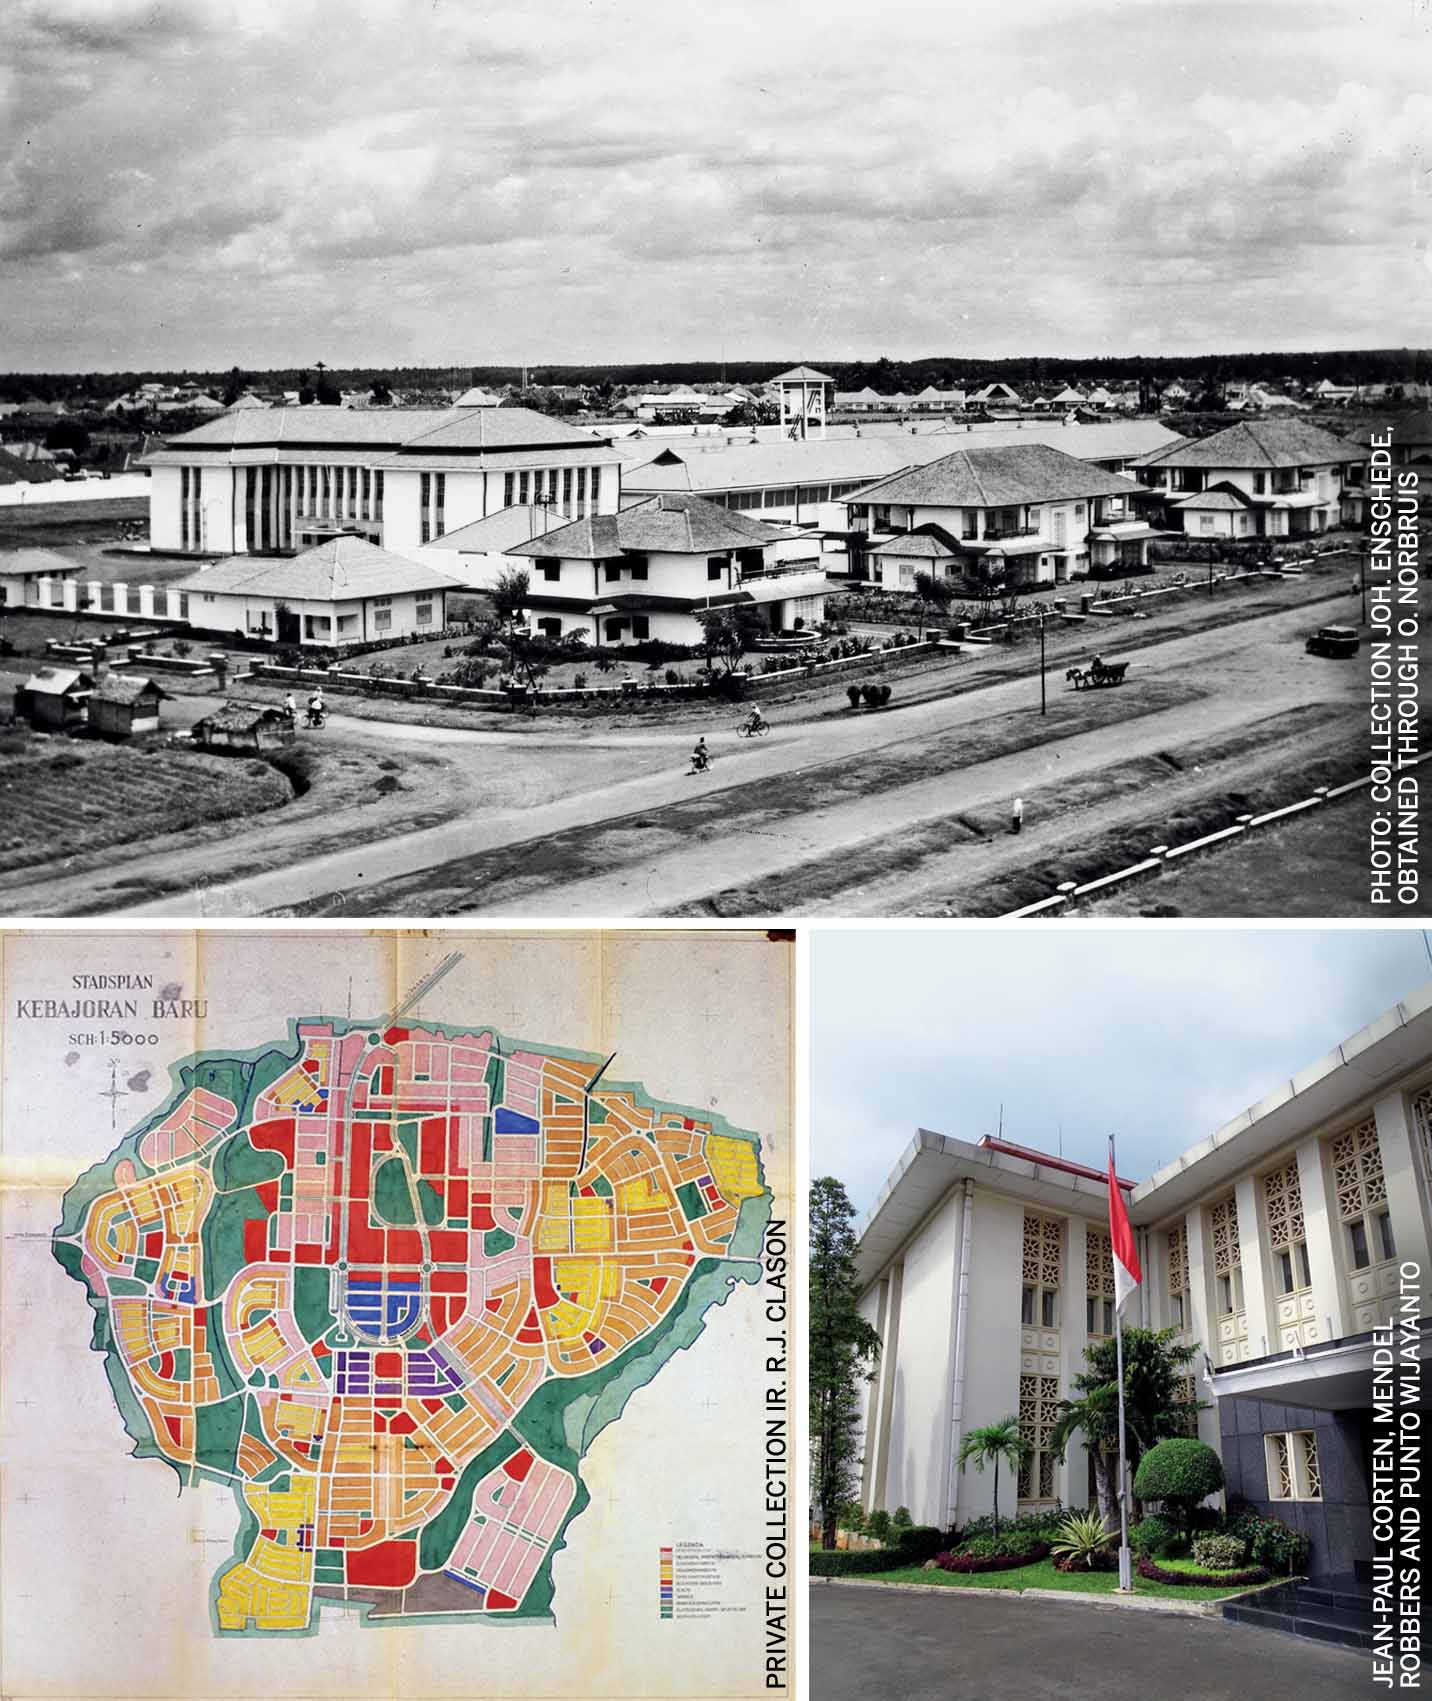 jakarta-shared-heritage-pertjekan-printworks-shortly-after-construction-around-1955-development-plan-for-kebayoran-baru-designed-under-leadership-ir-soesilo-1948-current-facade-peruris-headquarters